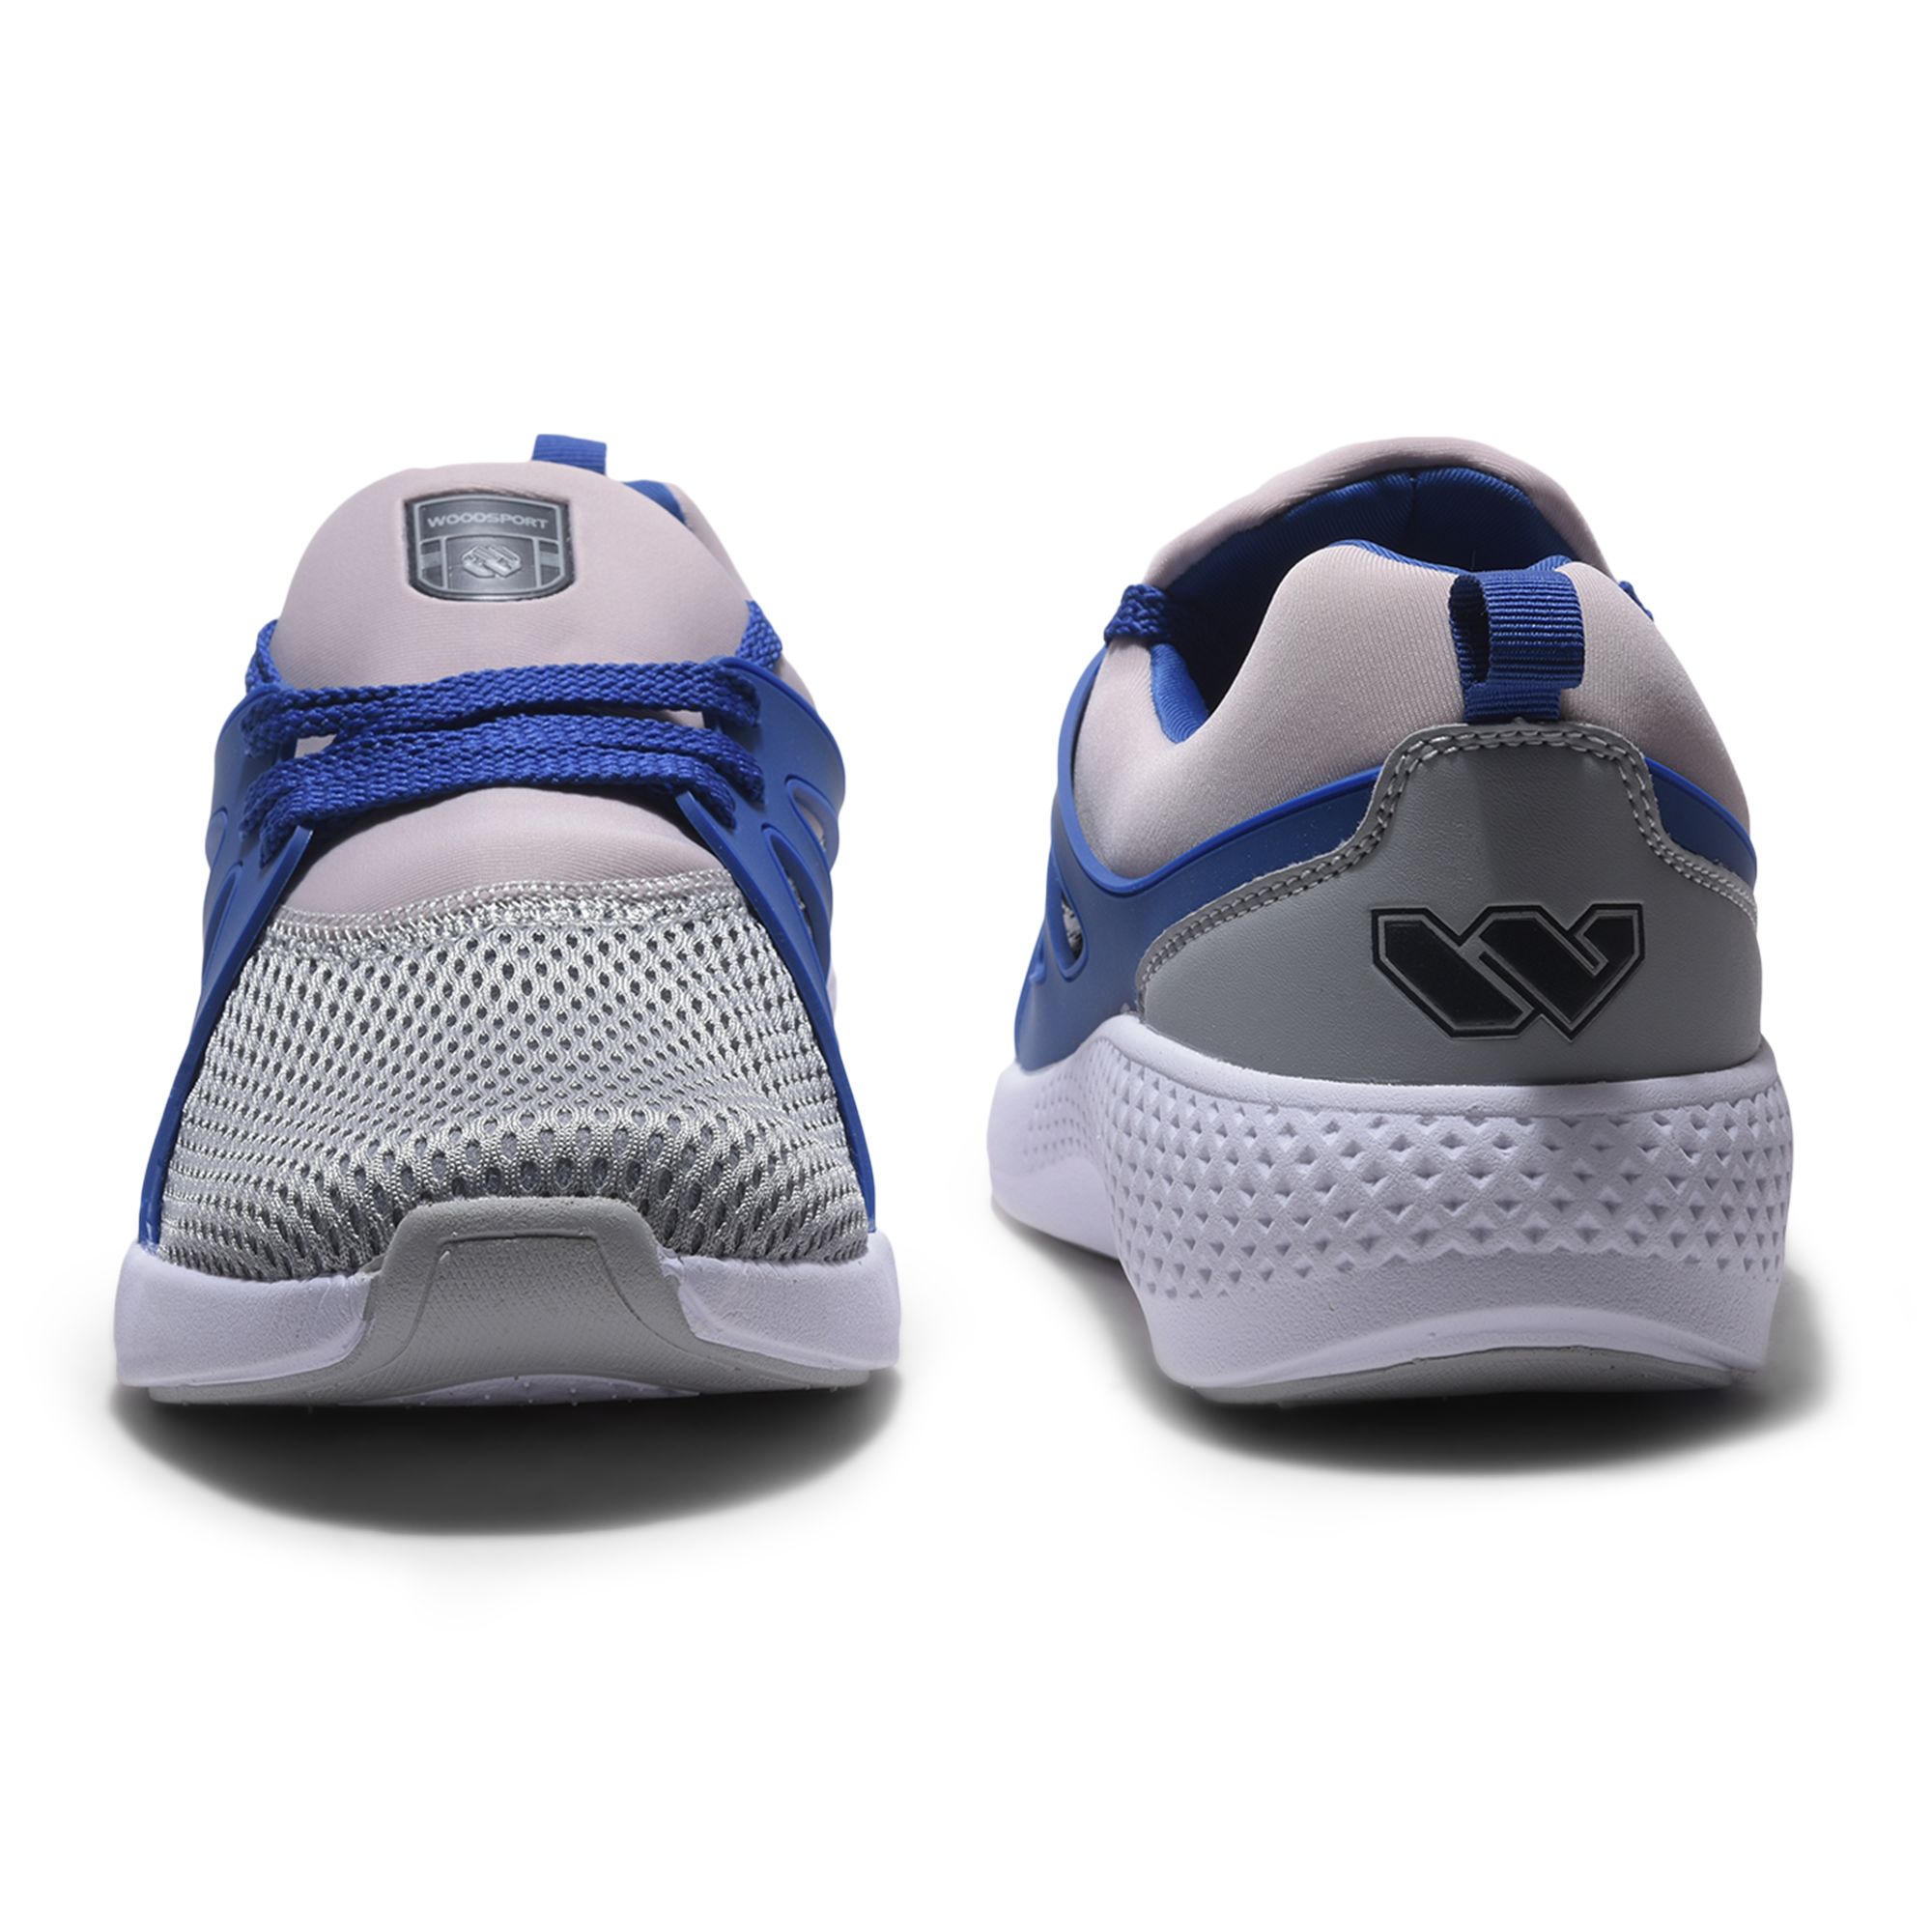 Grey/blue sneakers for men